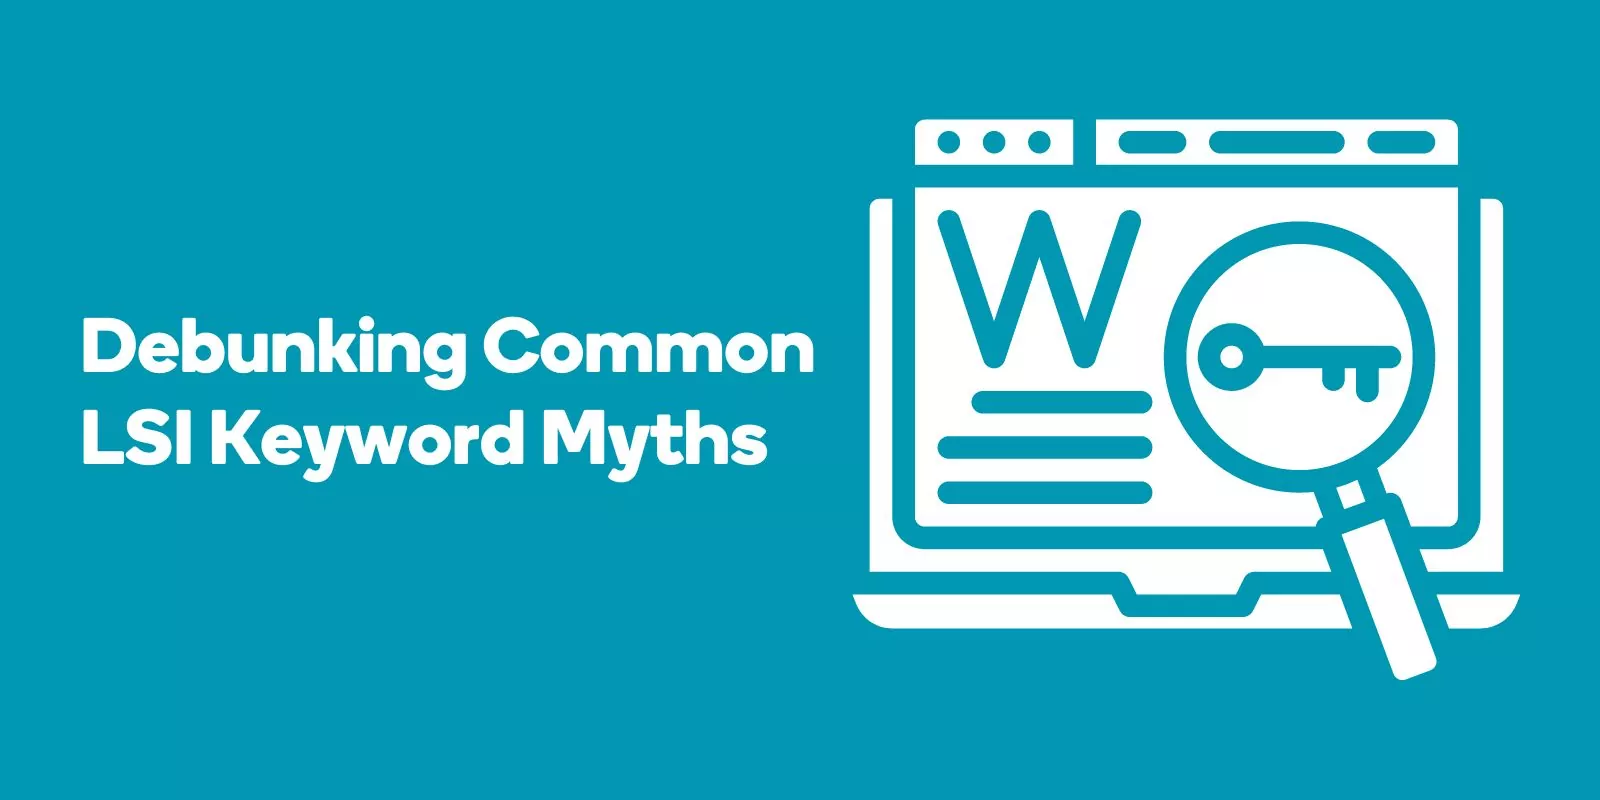 Debunking Common LSI Keyword Myths